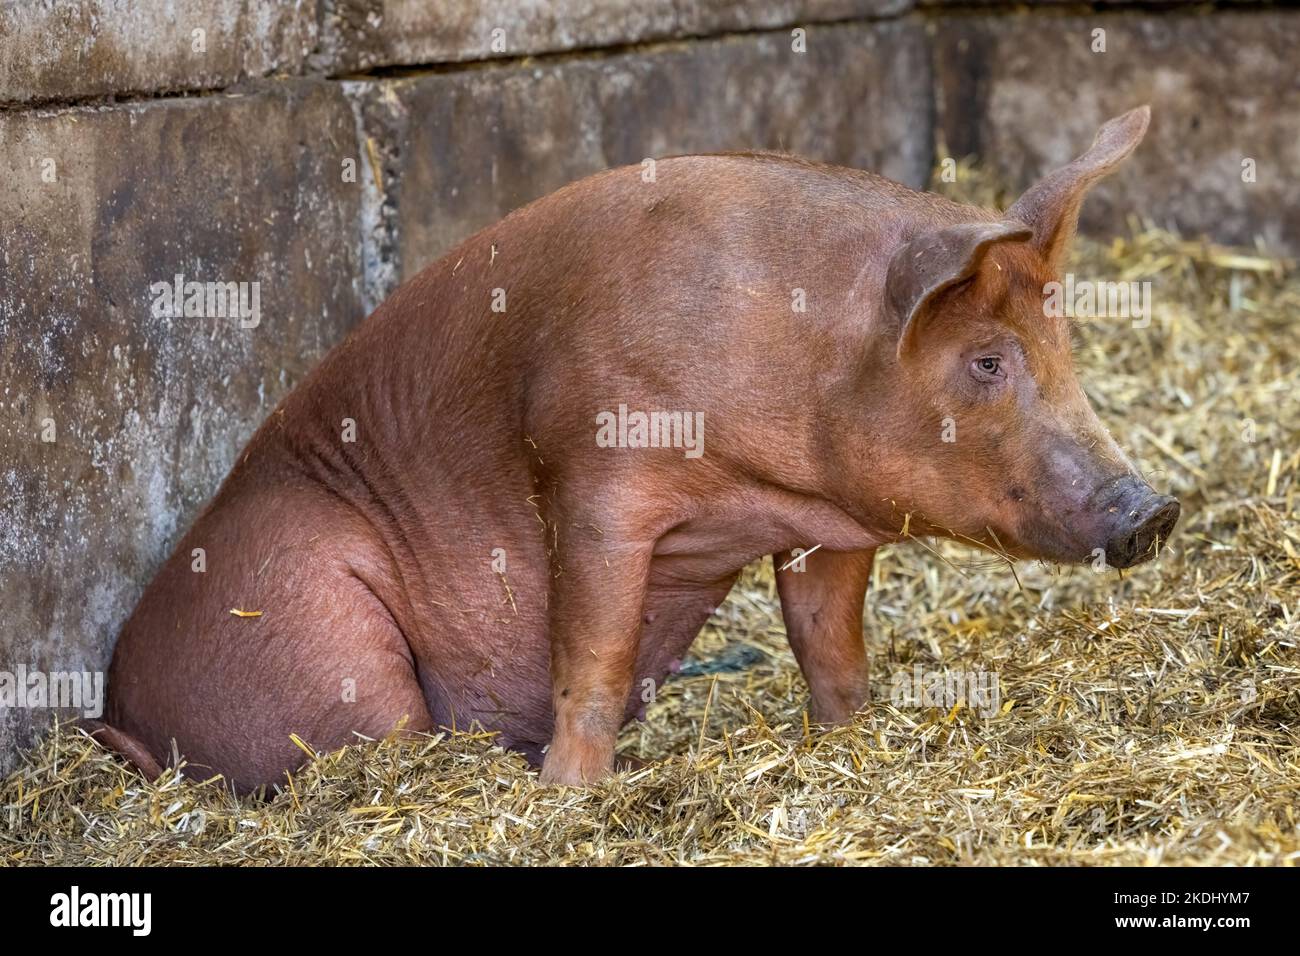 Chimacum, Washington, USA.  Tamworth Piglet sitting Stock Photo